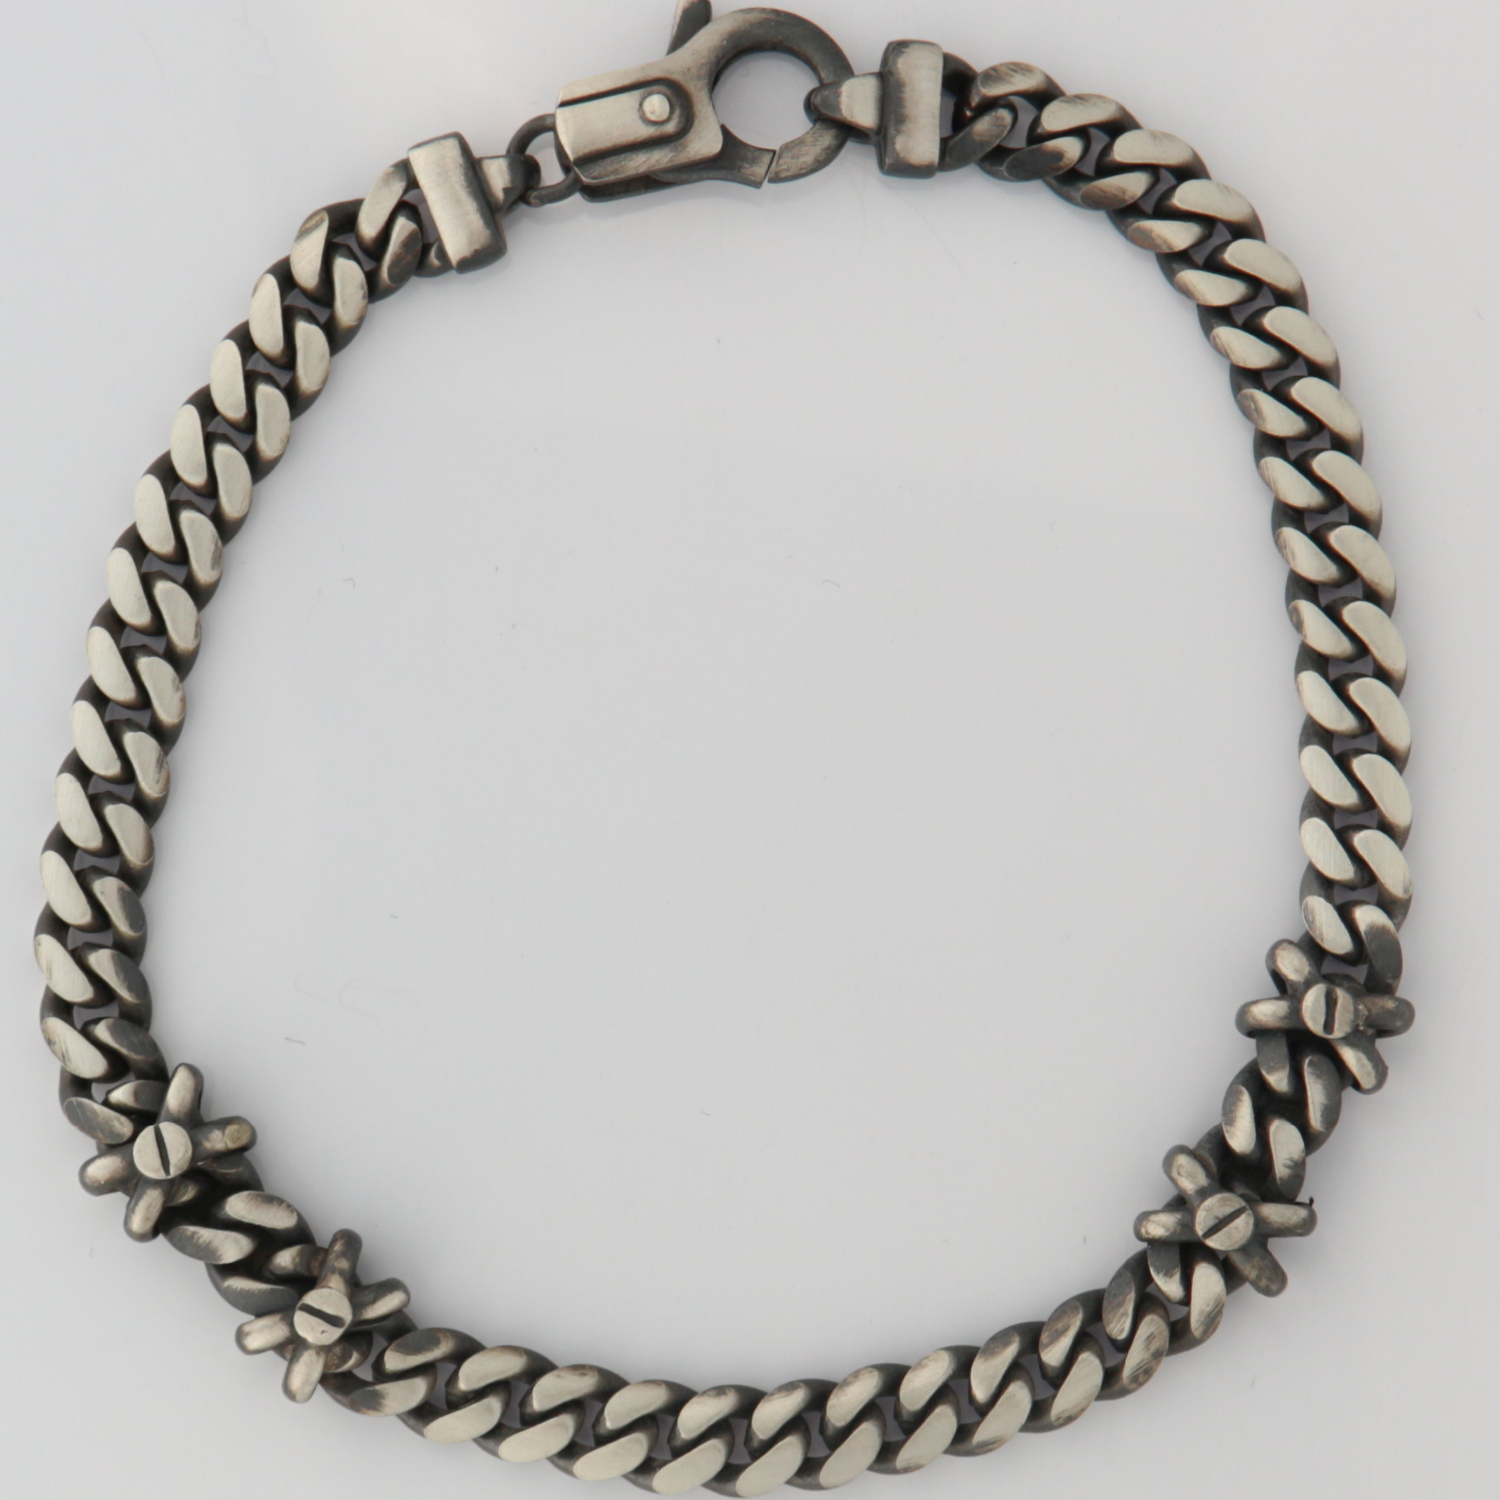 Bracelet men's 2 barbed wire elements oxidized-image